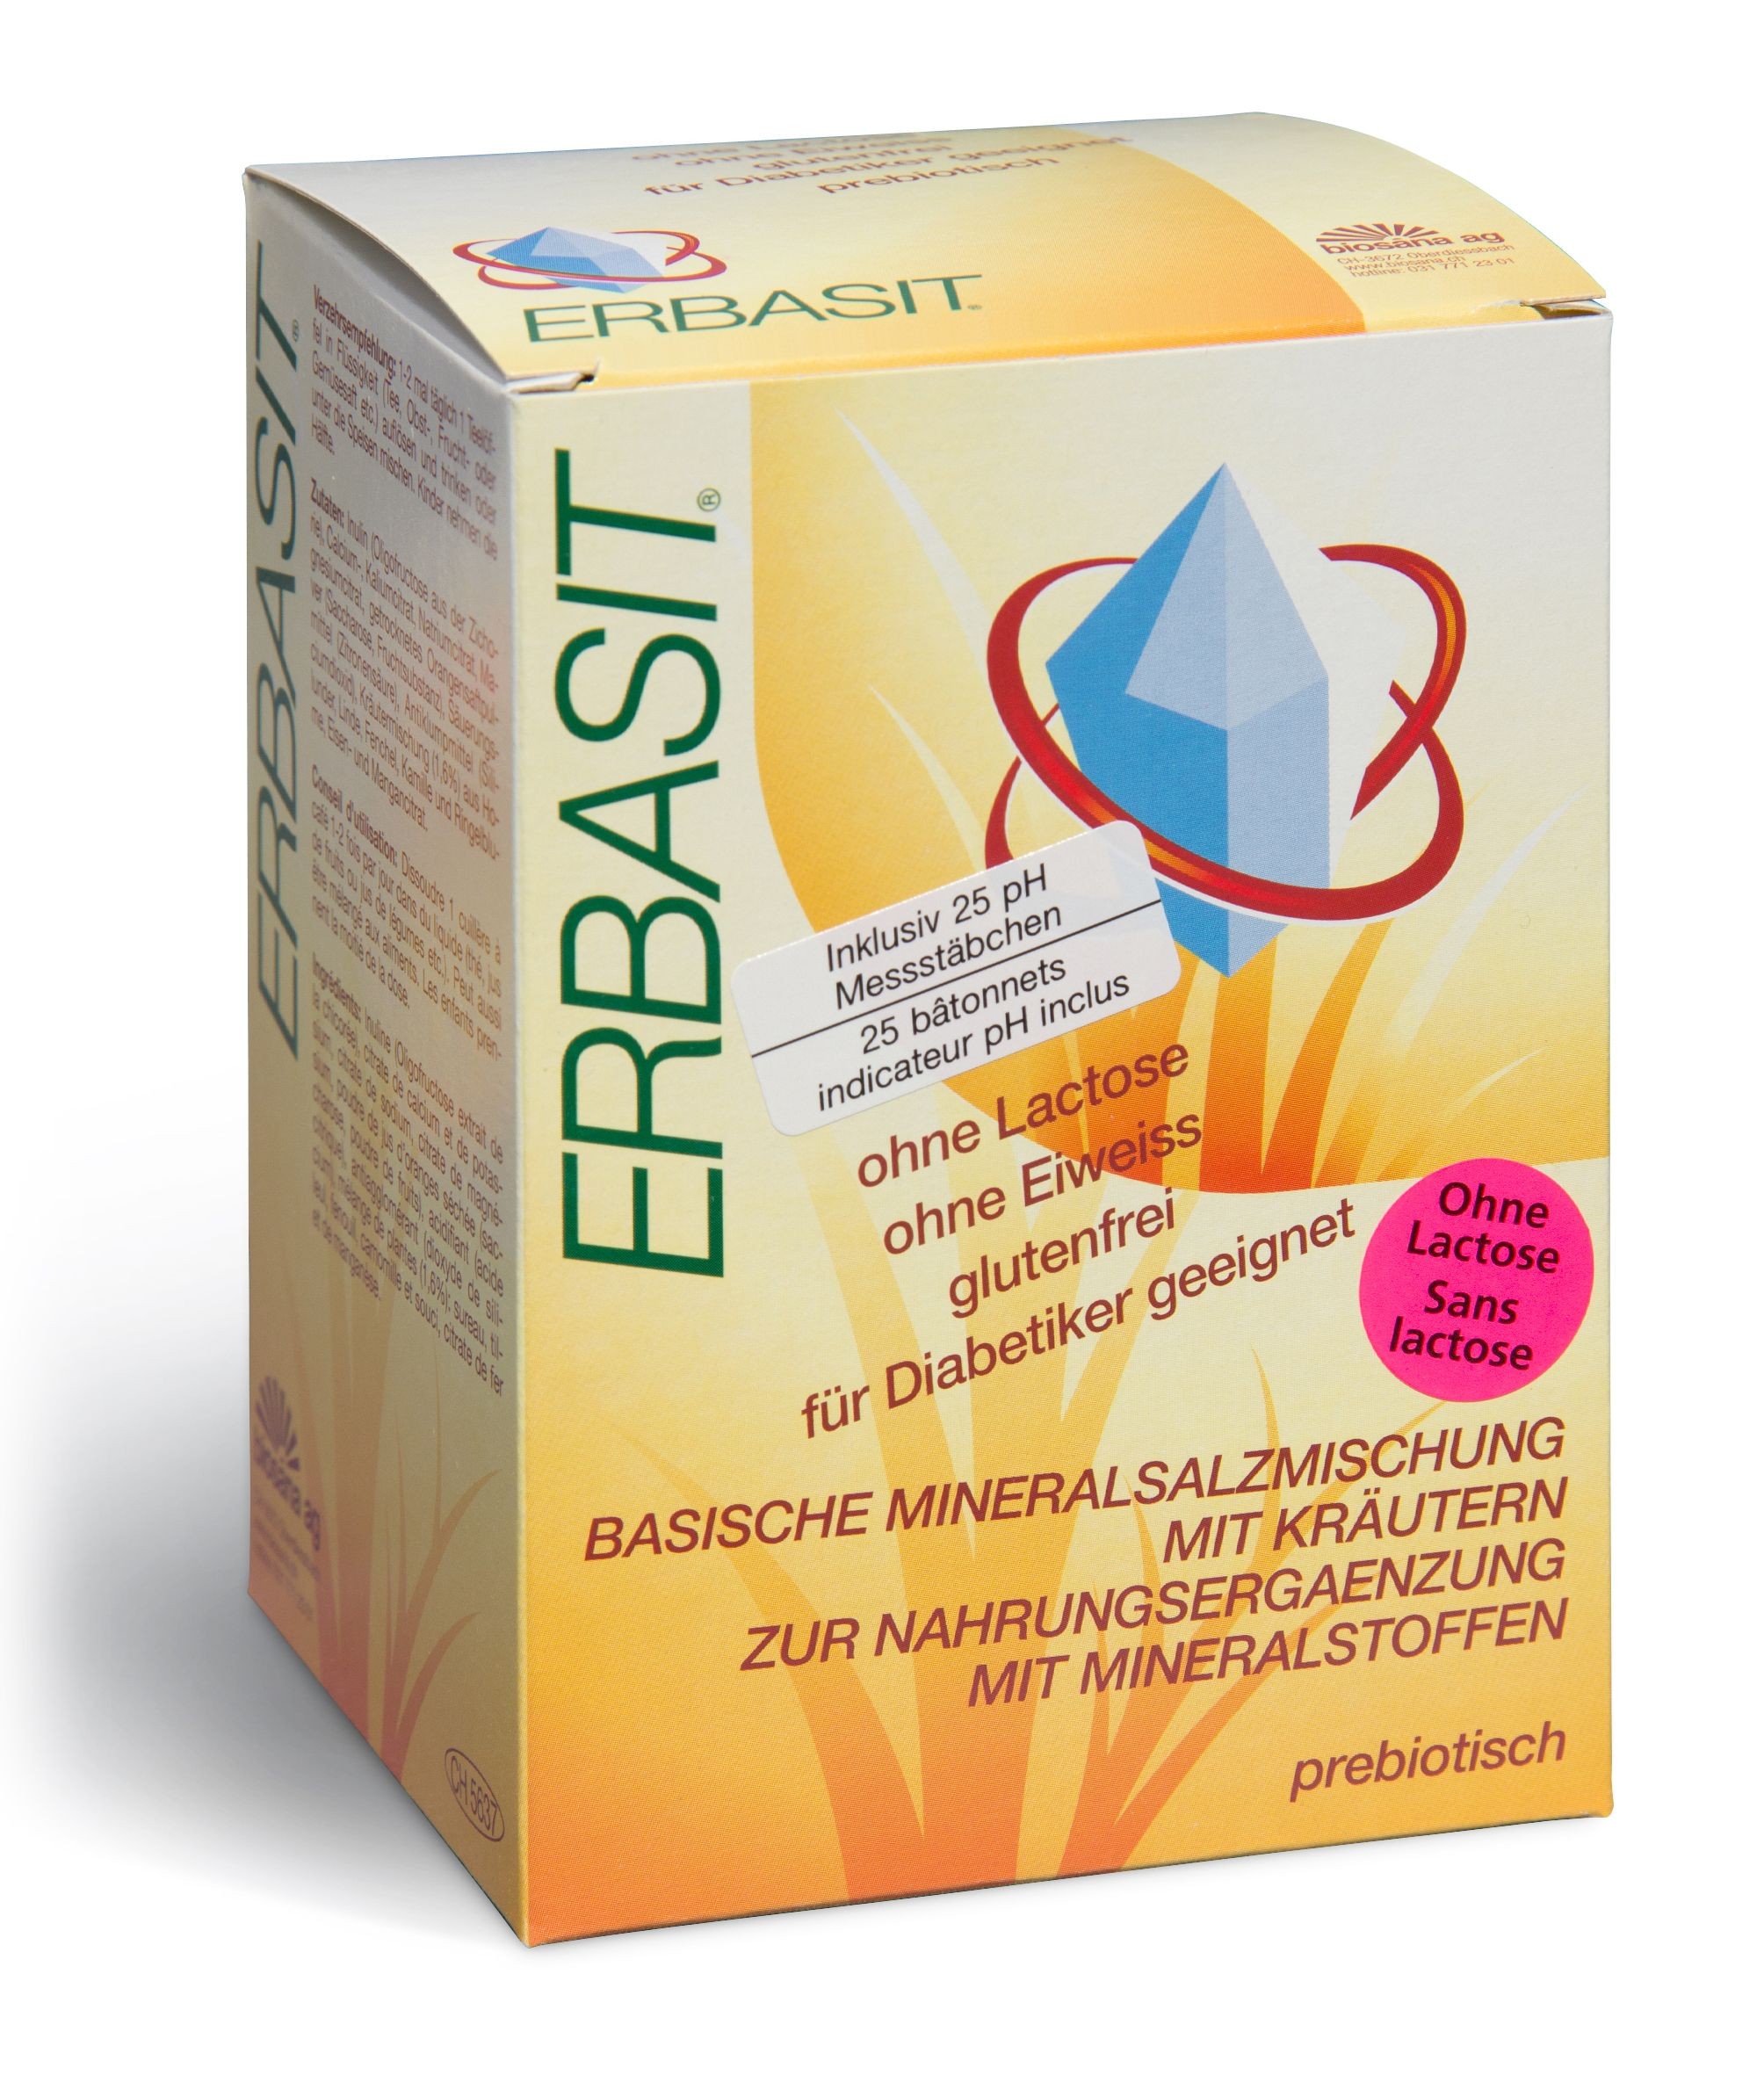 Image of Erbasit Mineralsalz Pulver ohne Lactose (240g)